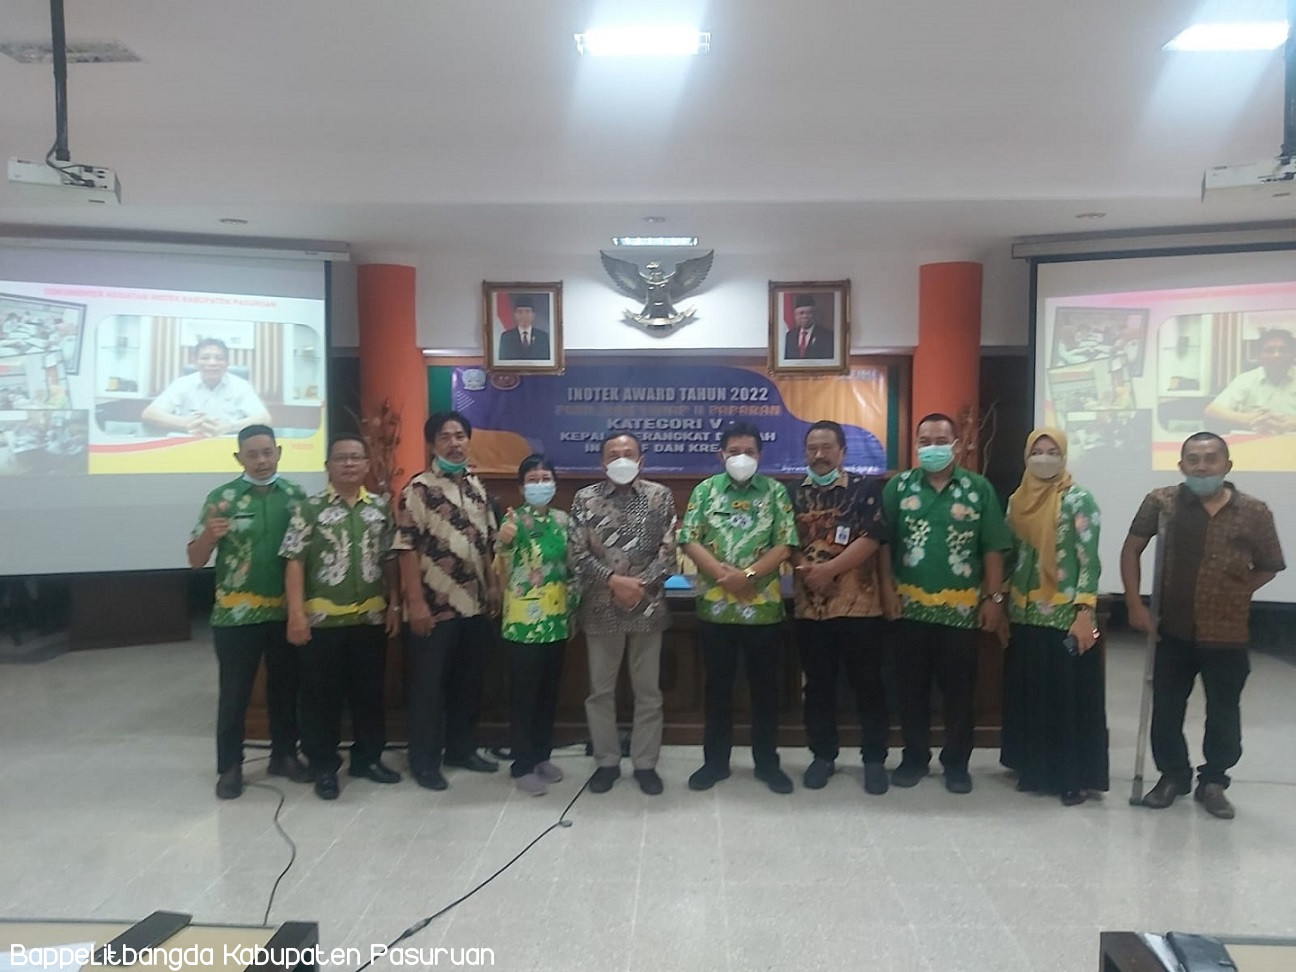 Kepala Bappelitbangda Sebagai Nominator Penganugrahan Inotek Award Provinsi Jawa Timur Tahun 2022